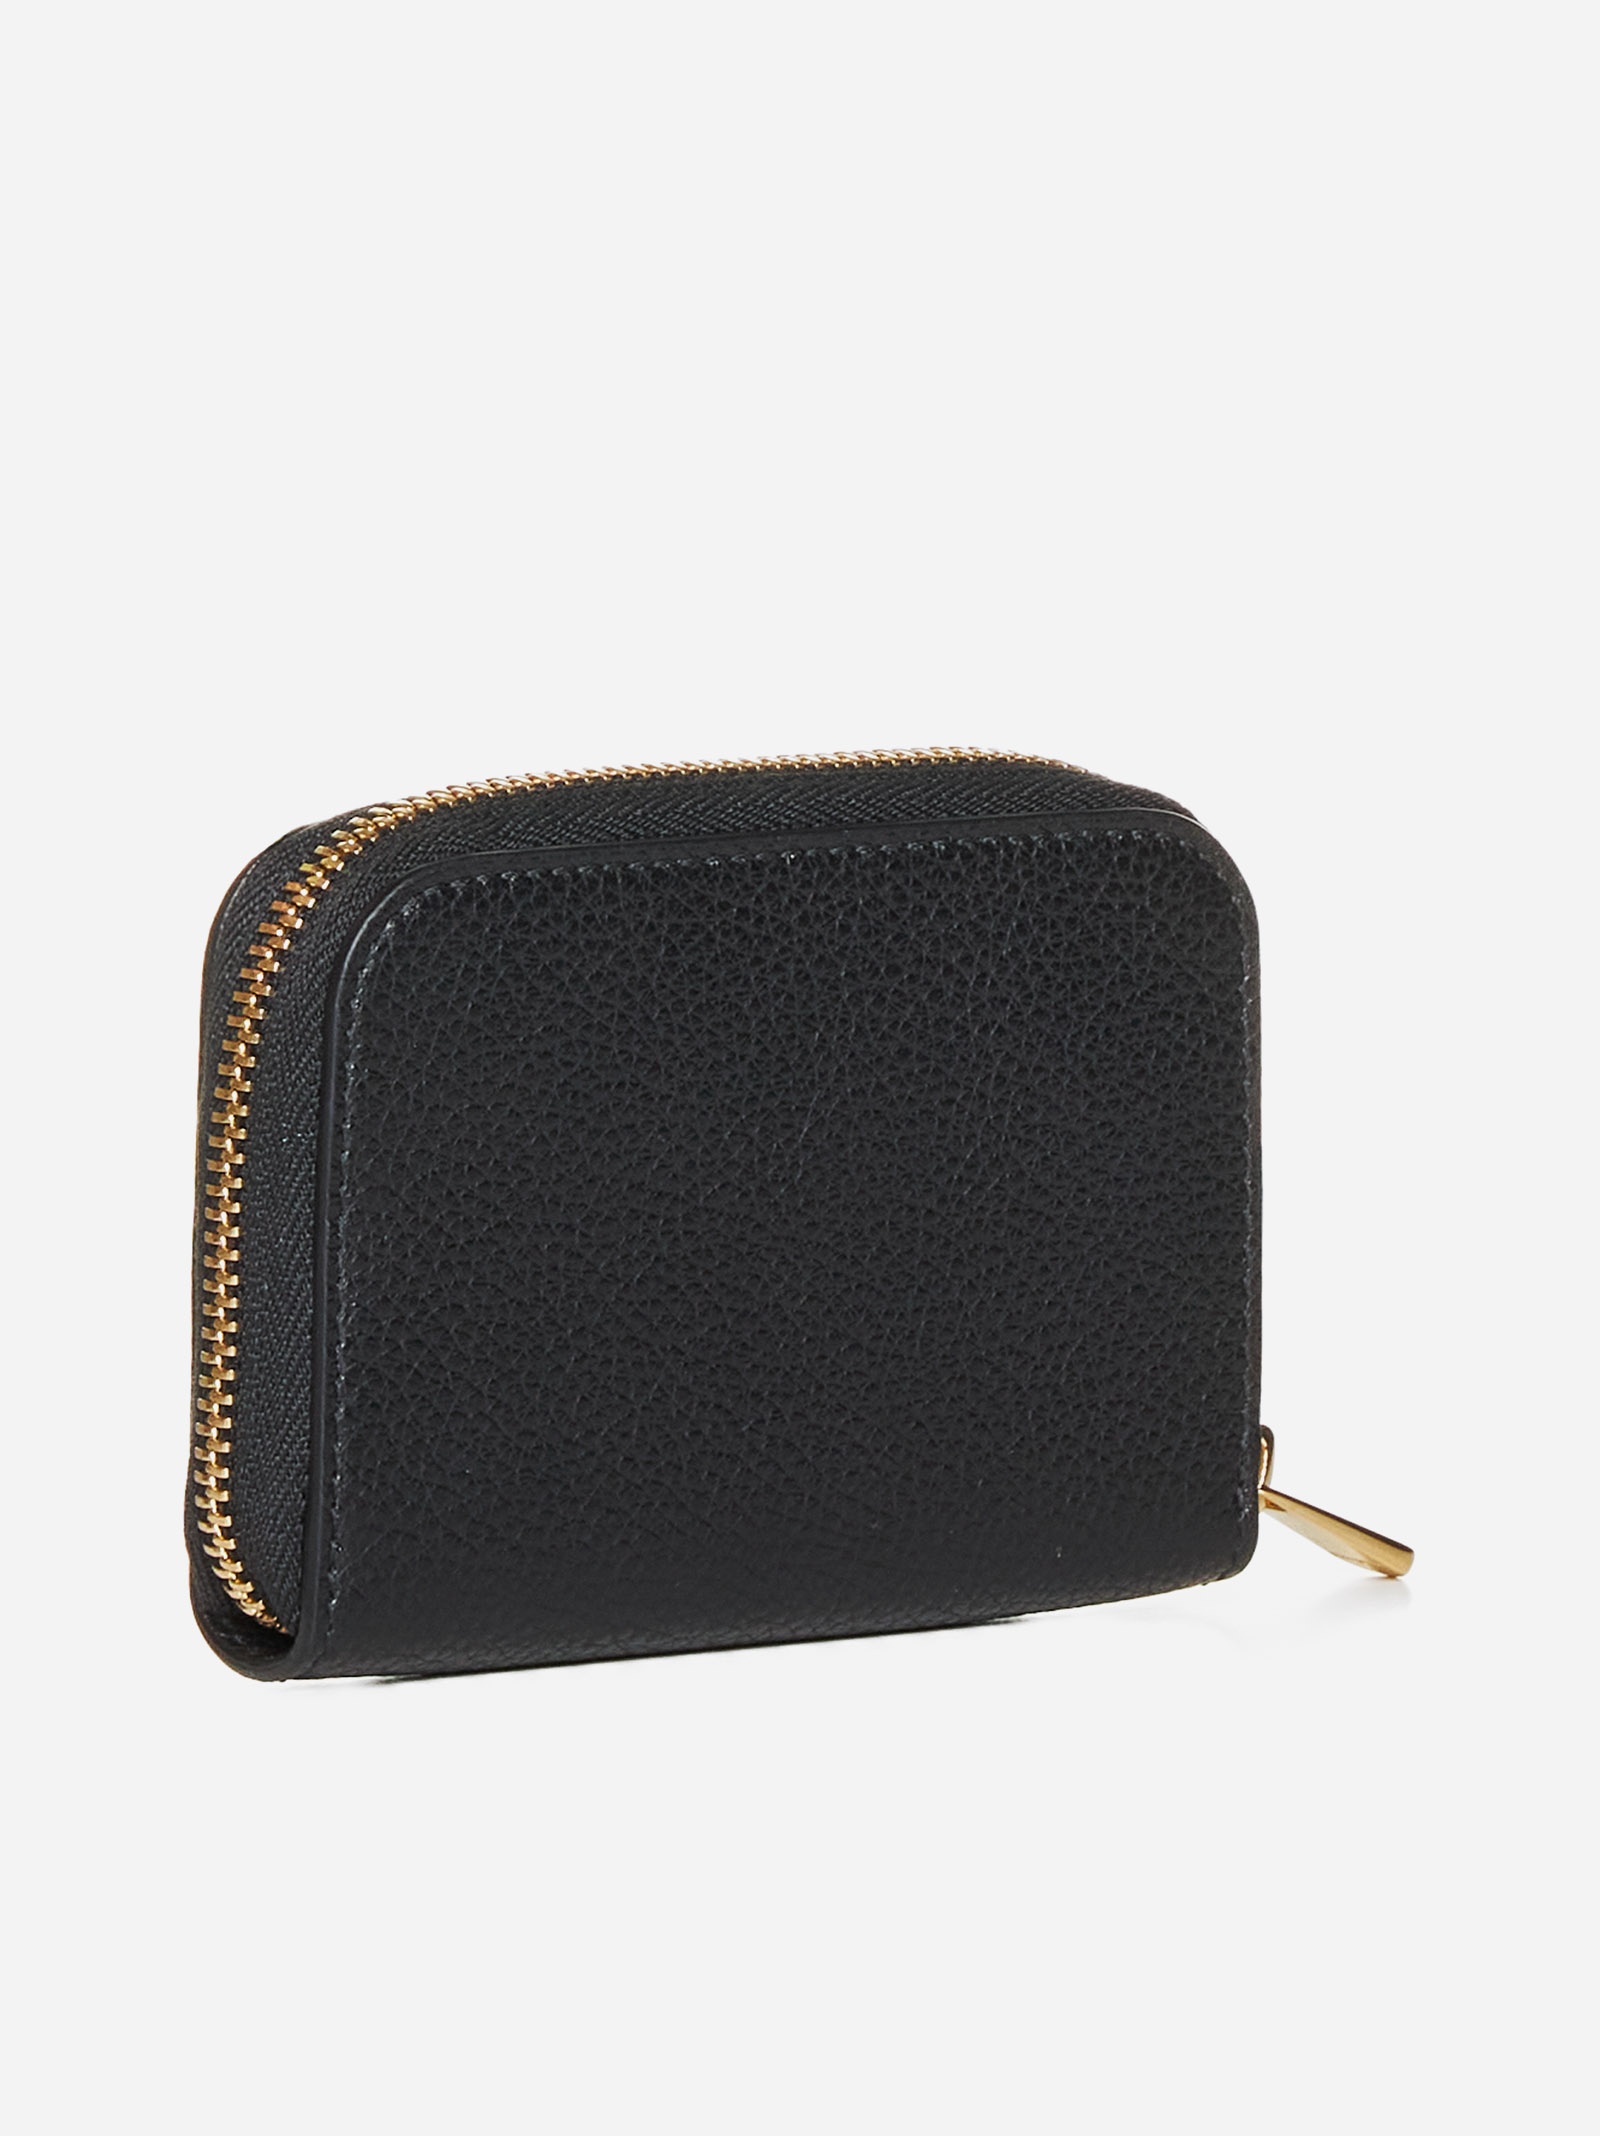 Gancini leather coin purse - 3